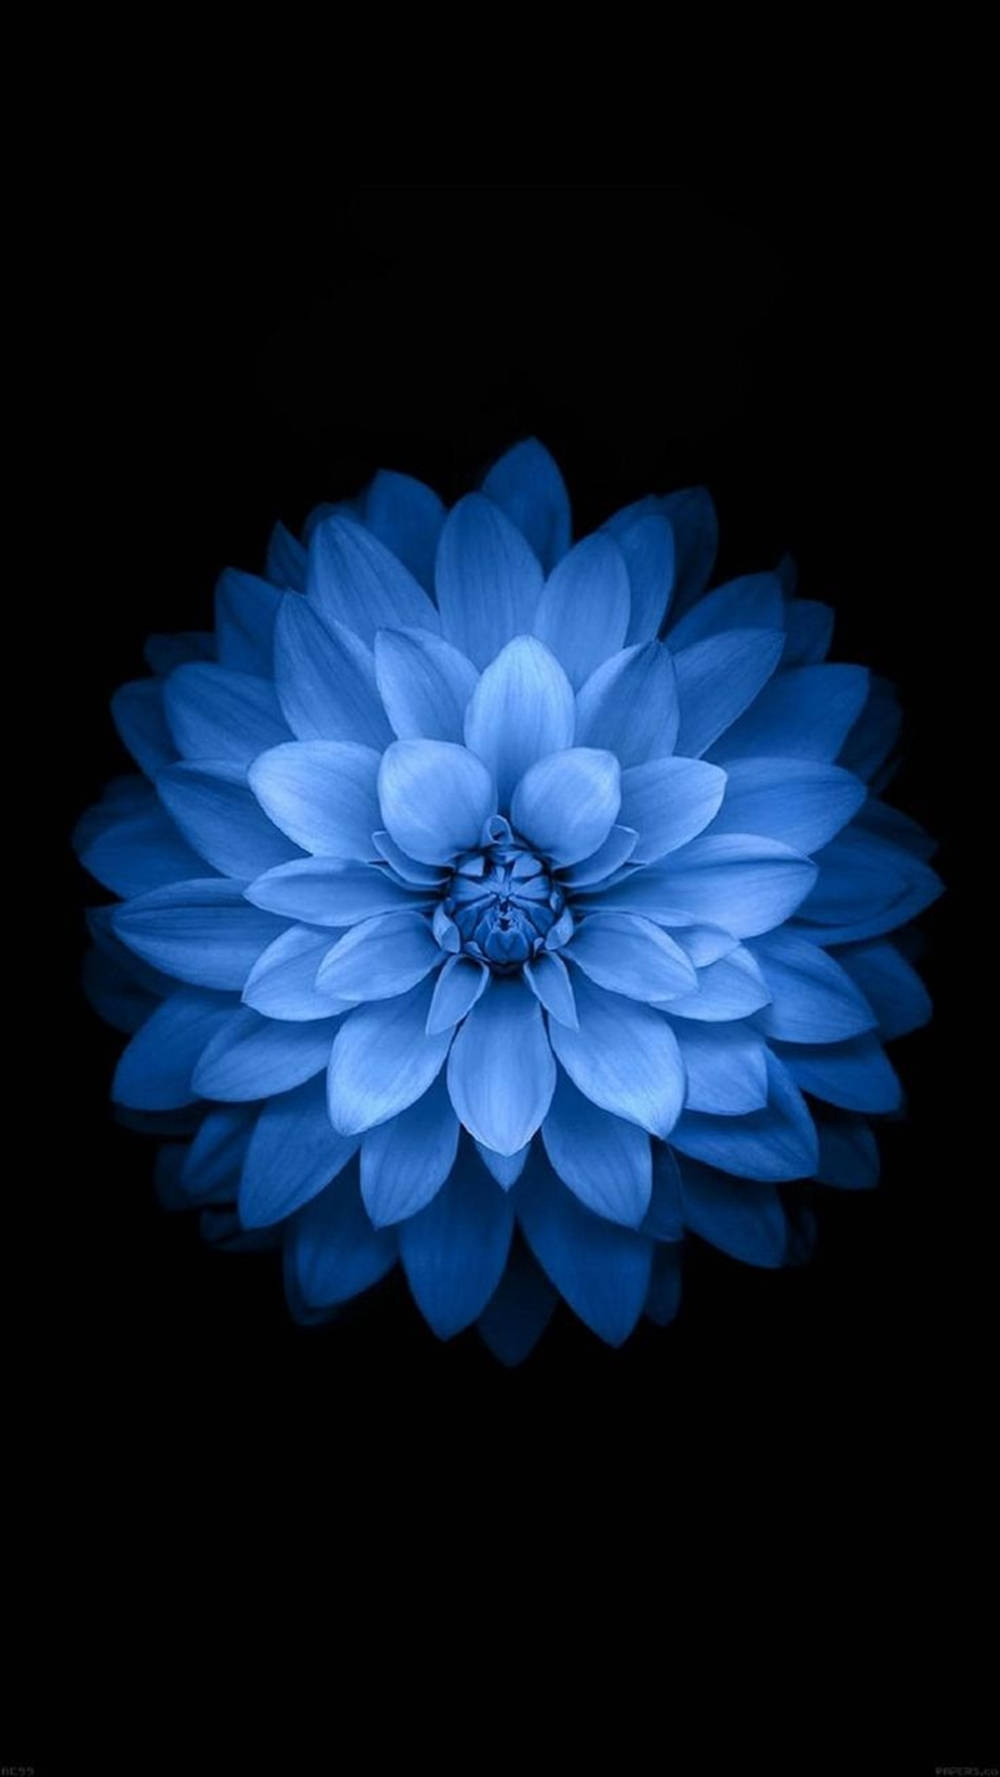 Exquisite Light Blue Dahlia In Bloom Wallpaper